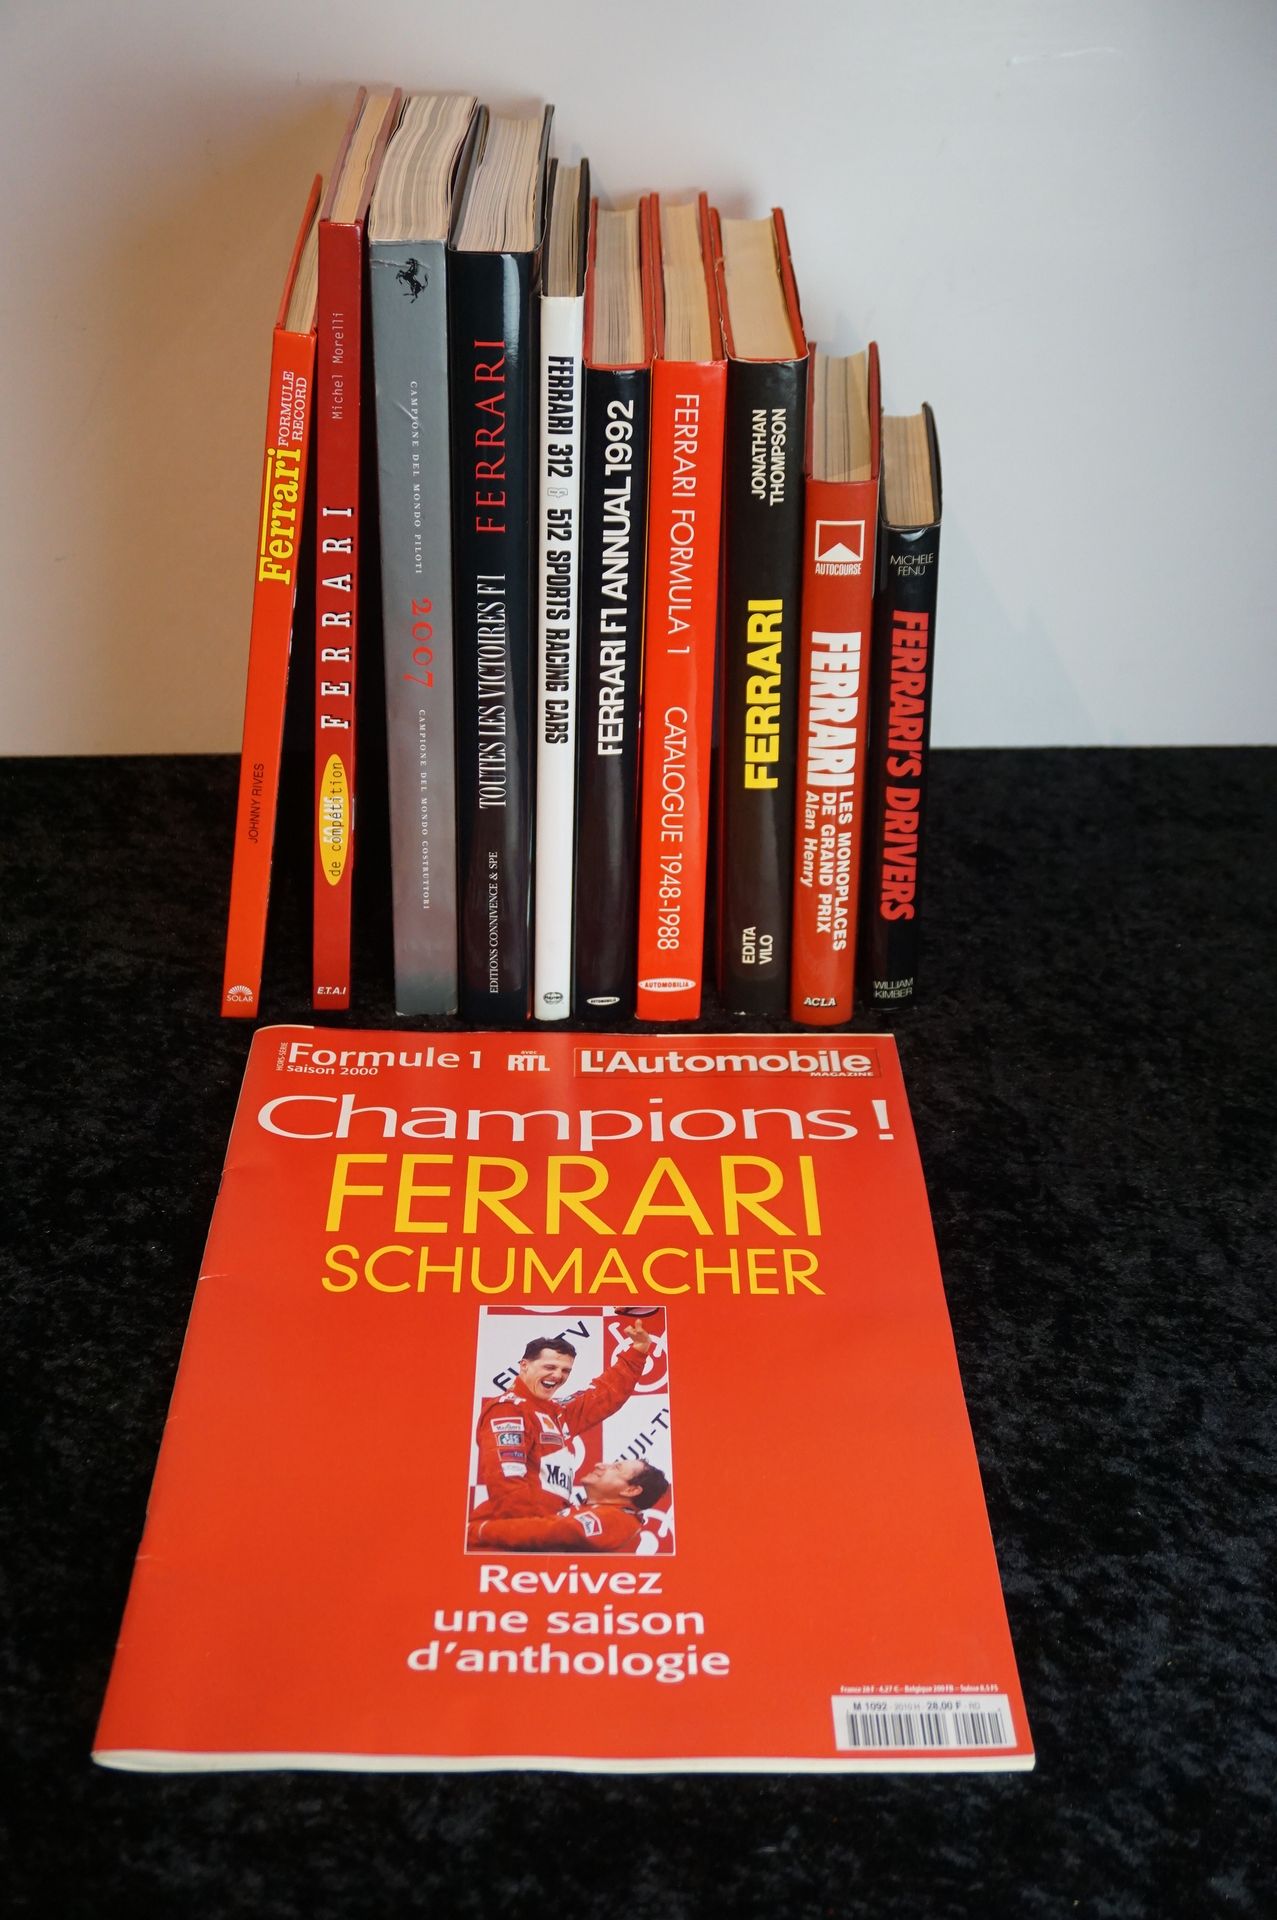 Null Bücher Ferrari F1
- Champions! Ferrari Schumacher : Das Automagazin
- Ferra&hellip;